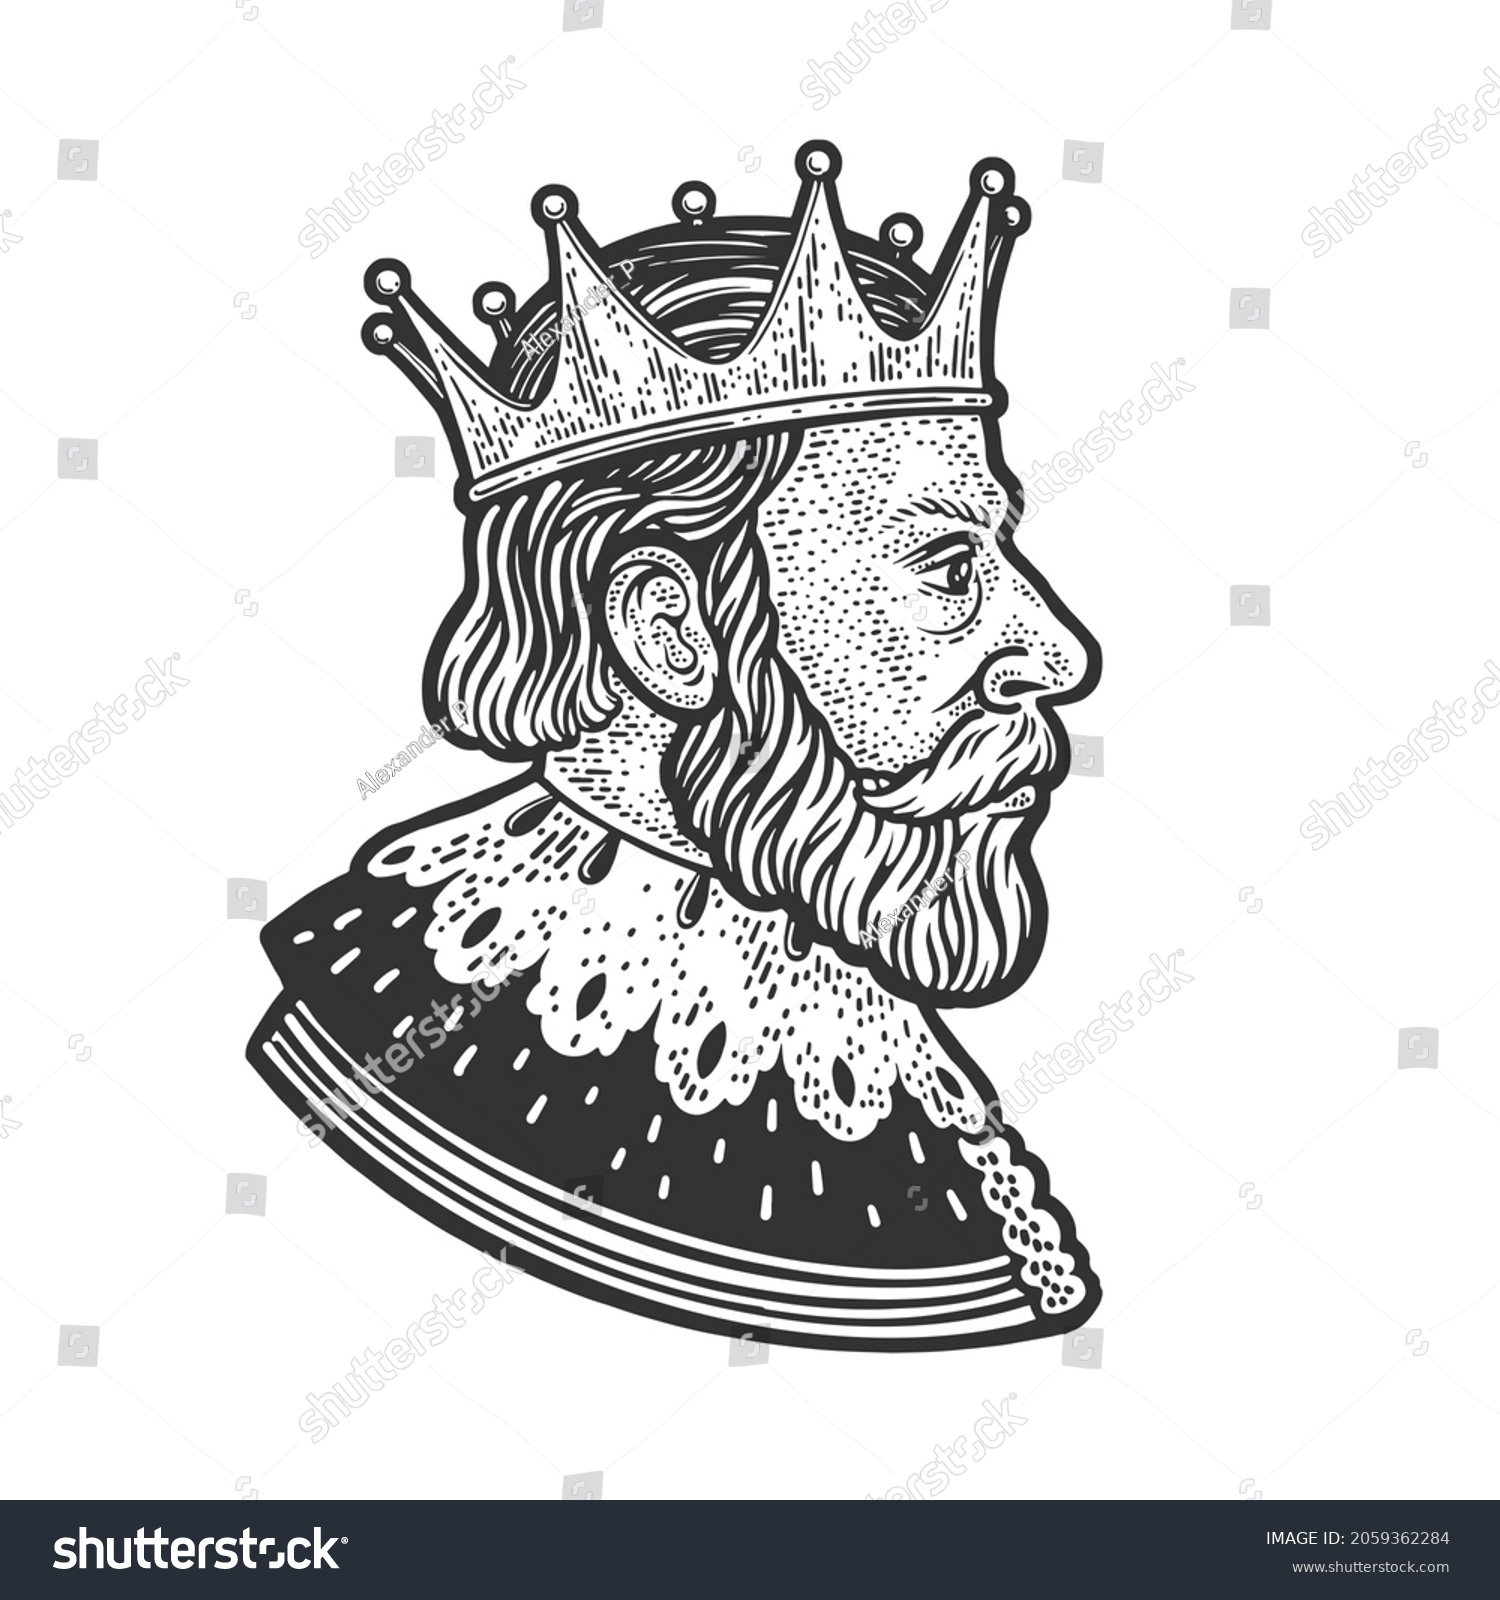 Portrait King Crown Sketch Engraving Raster Stock Illustration ...